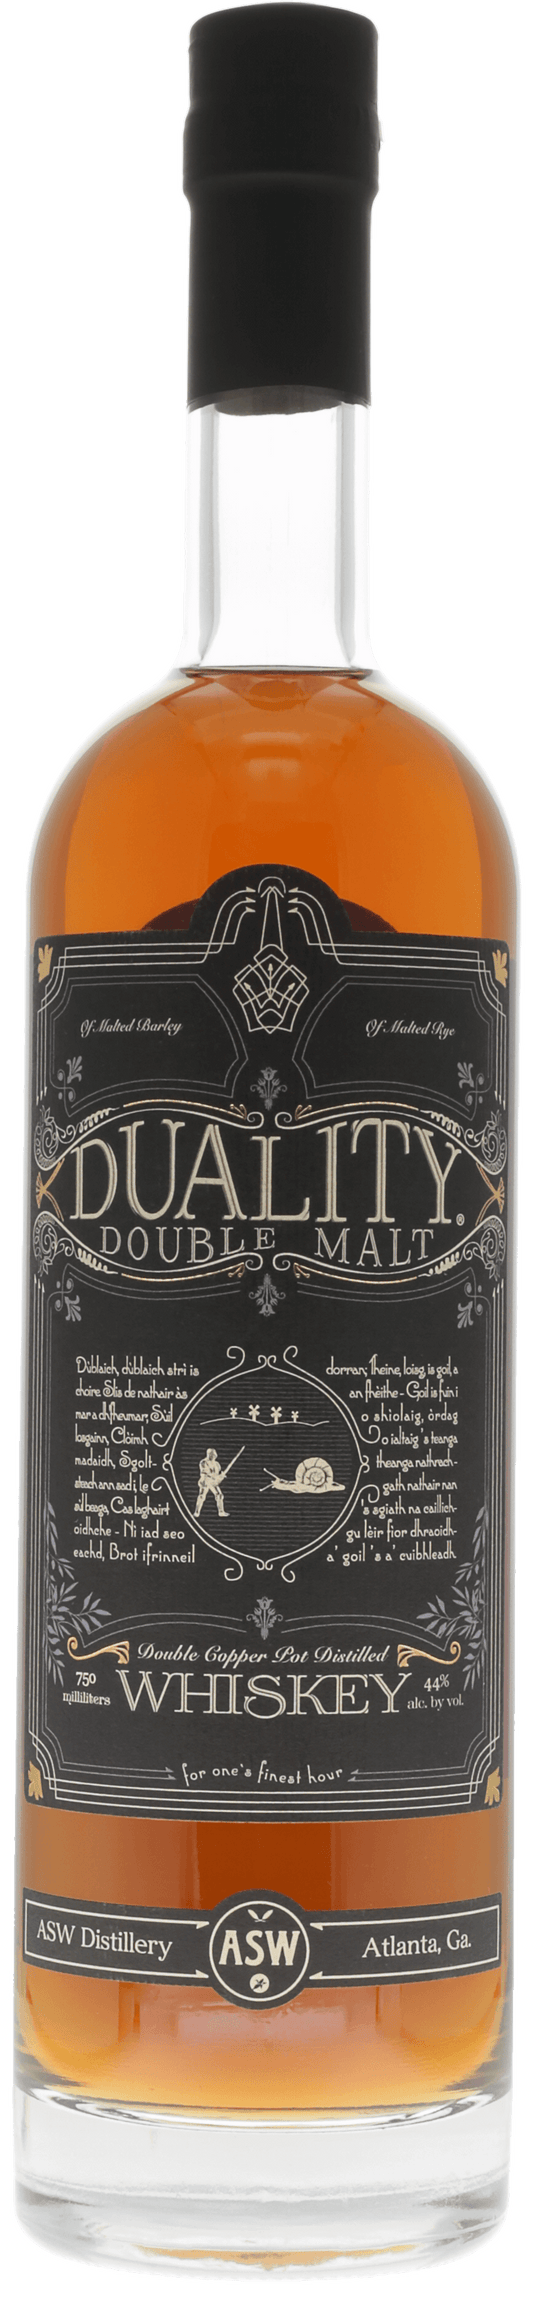 Duality Double Malt Whiskey